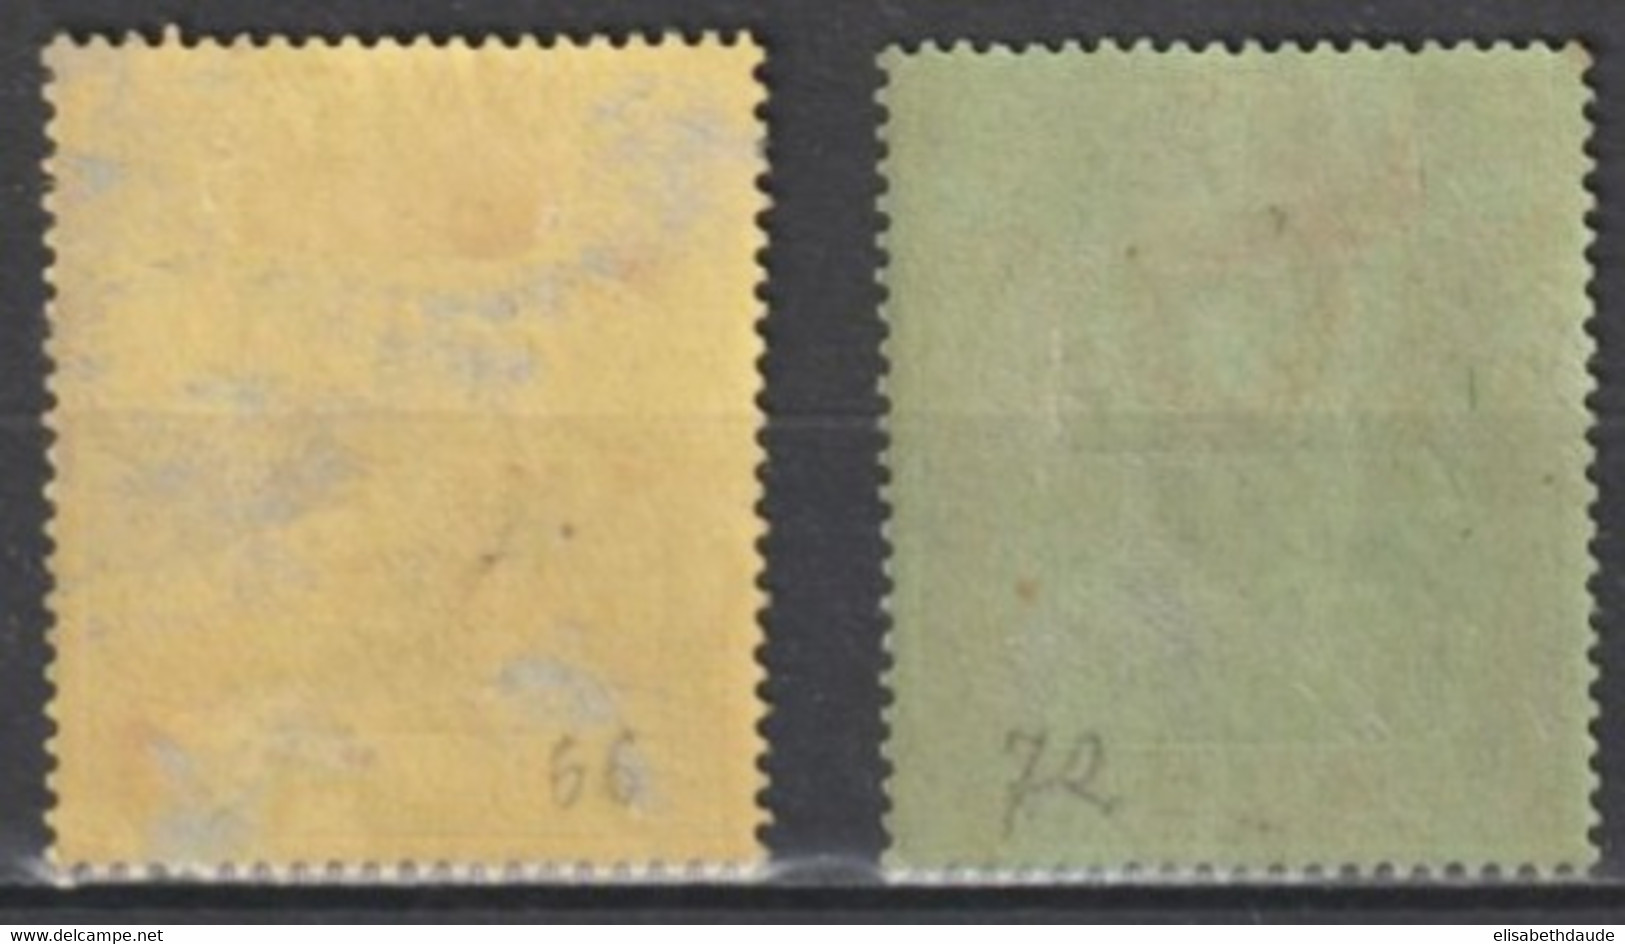 STE HELENE - 1922/23 - YVERT N°66 (FIL. CA) * MH (LEGERES ADHERENCES PAPIER) + 72 * MLH - COTE = 66 EUR - BATEAUX - Saint Helena Island